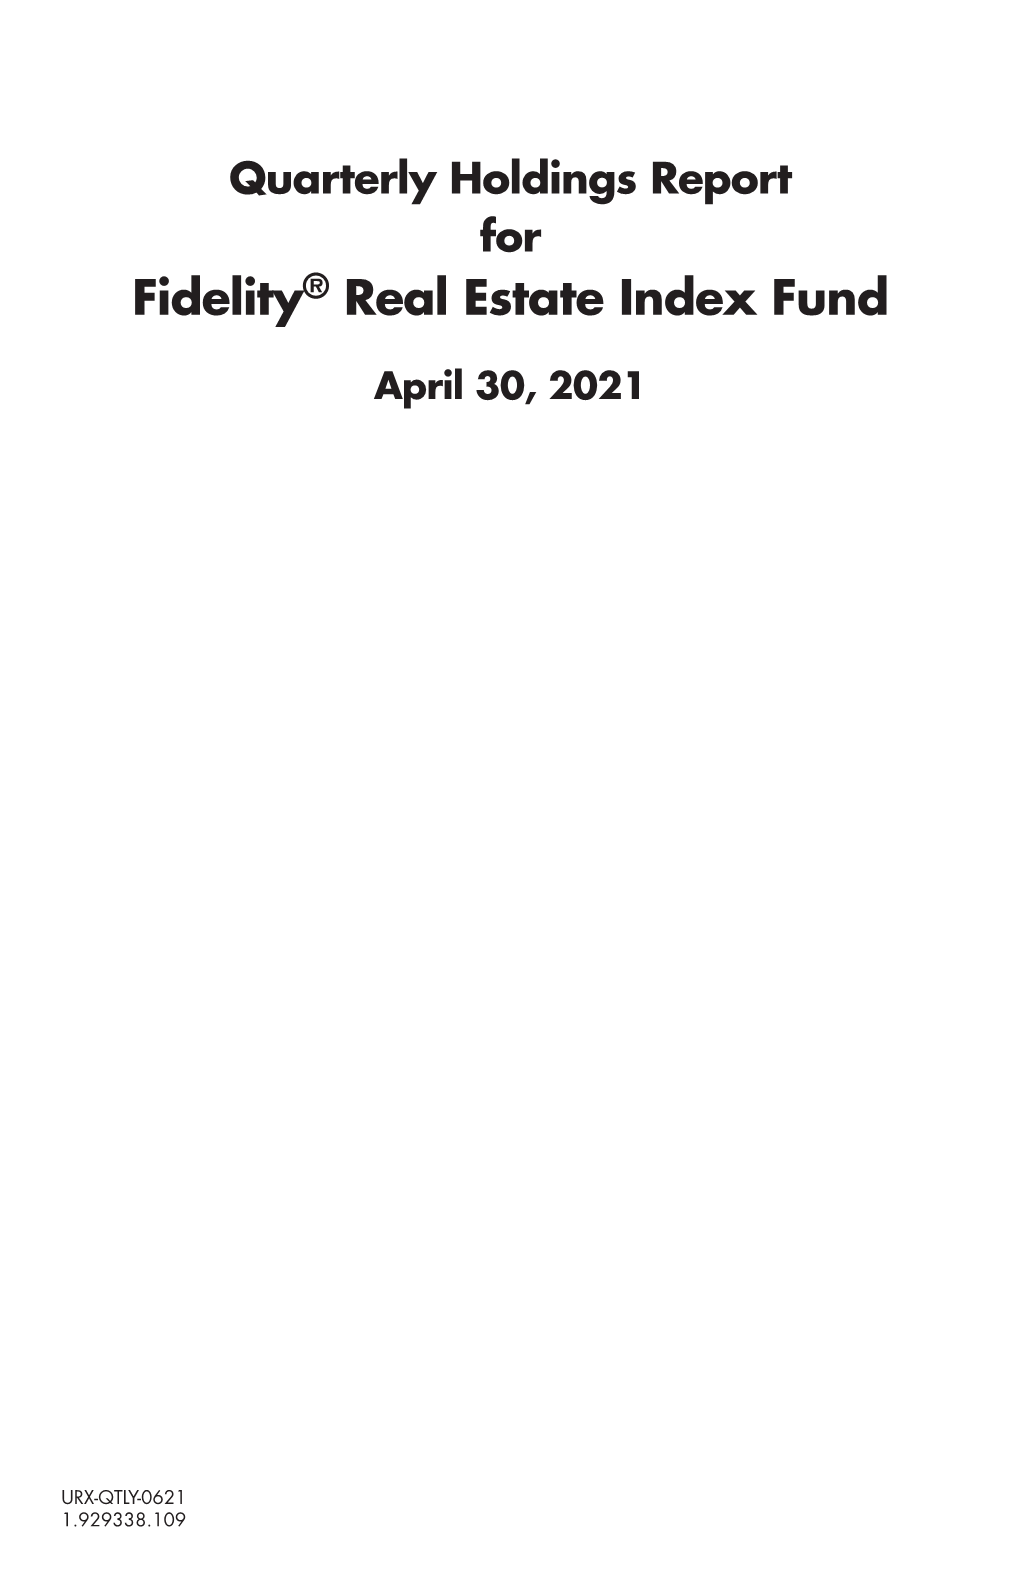 Fidelity® Real Estate Index Fund